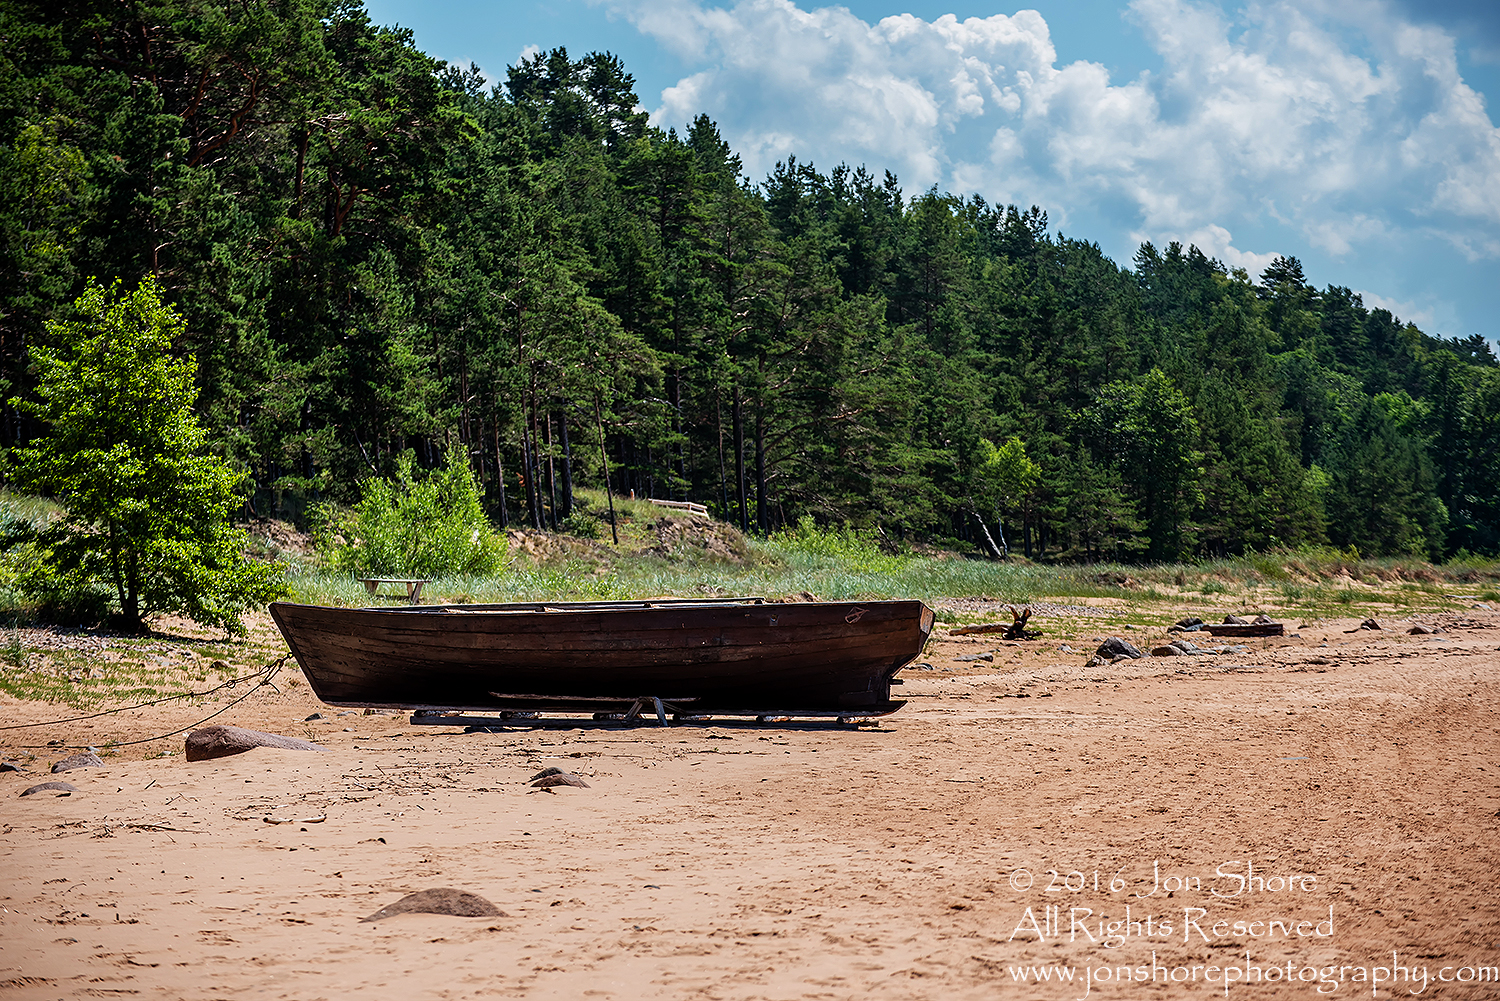 Old Fishing Boat near Tuja, Latvia on Baltic Sea. Tamron 300mm